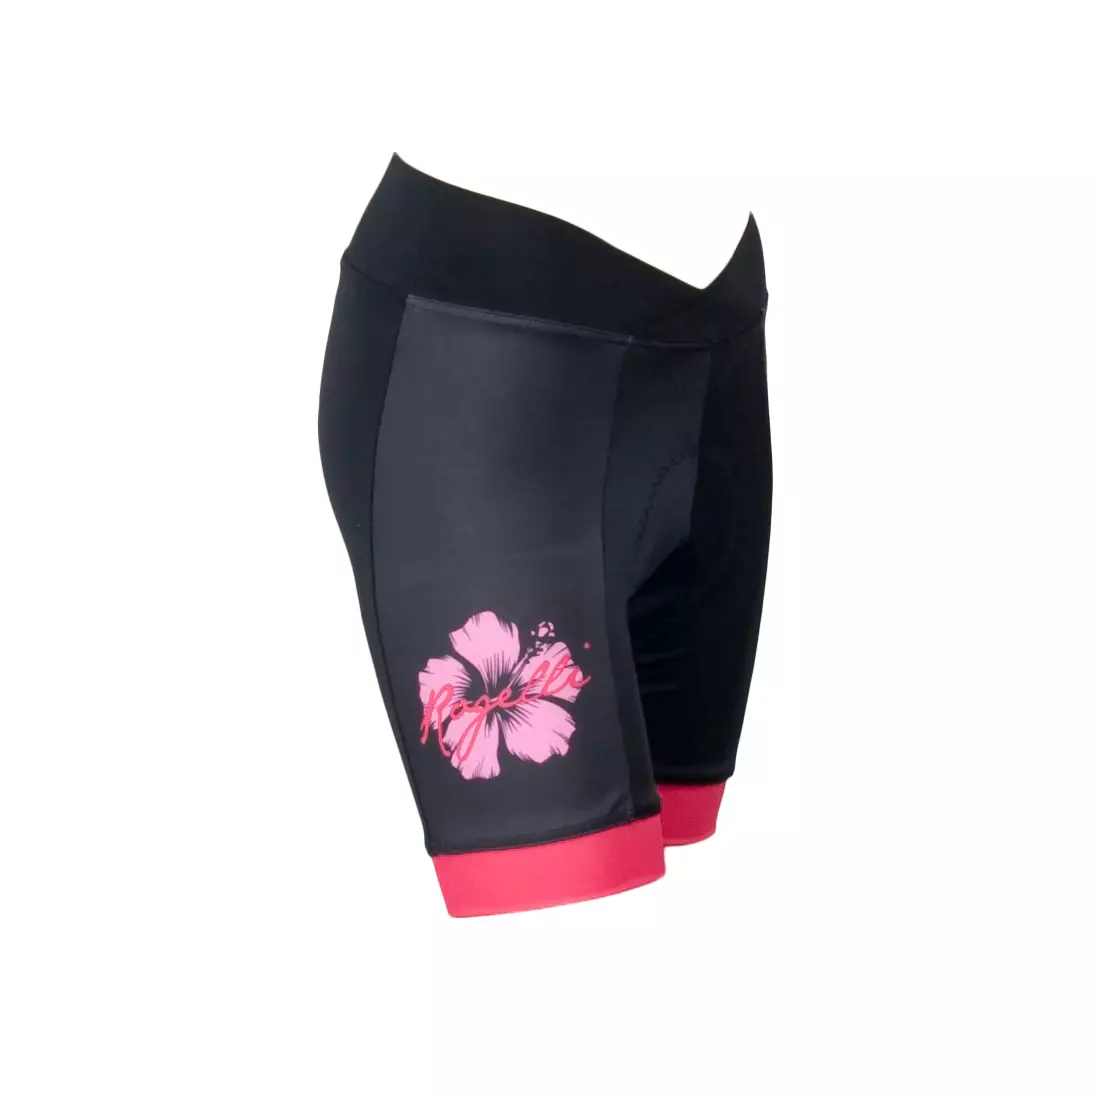 ROGELLI SABRINA - women's cycling shorts